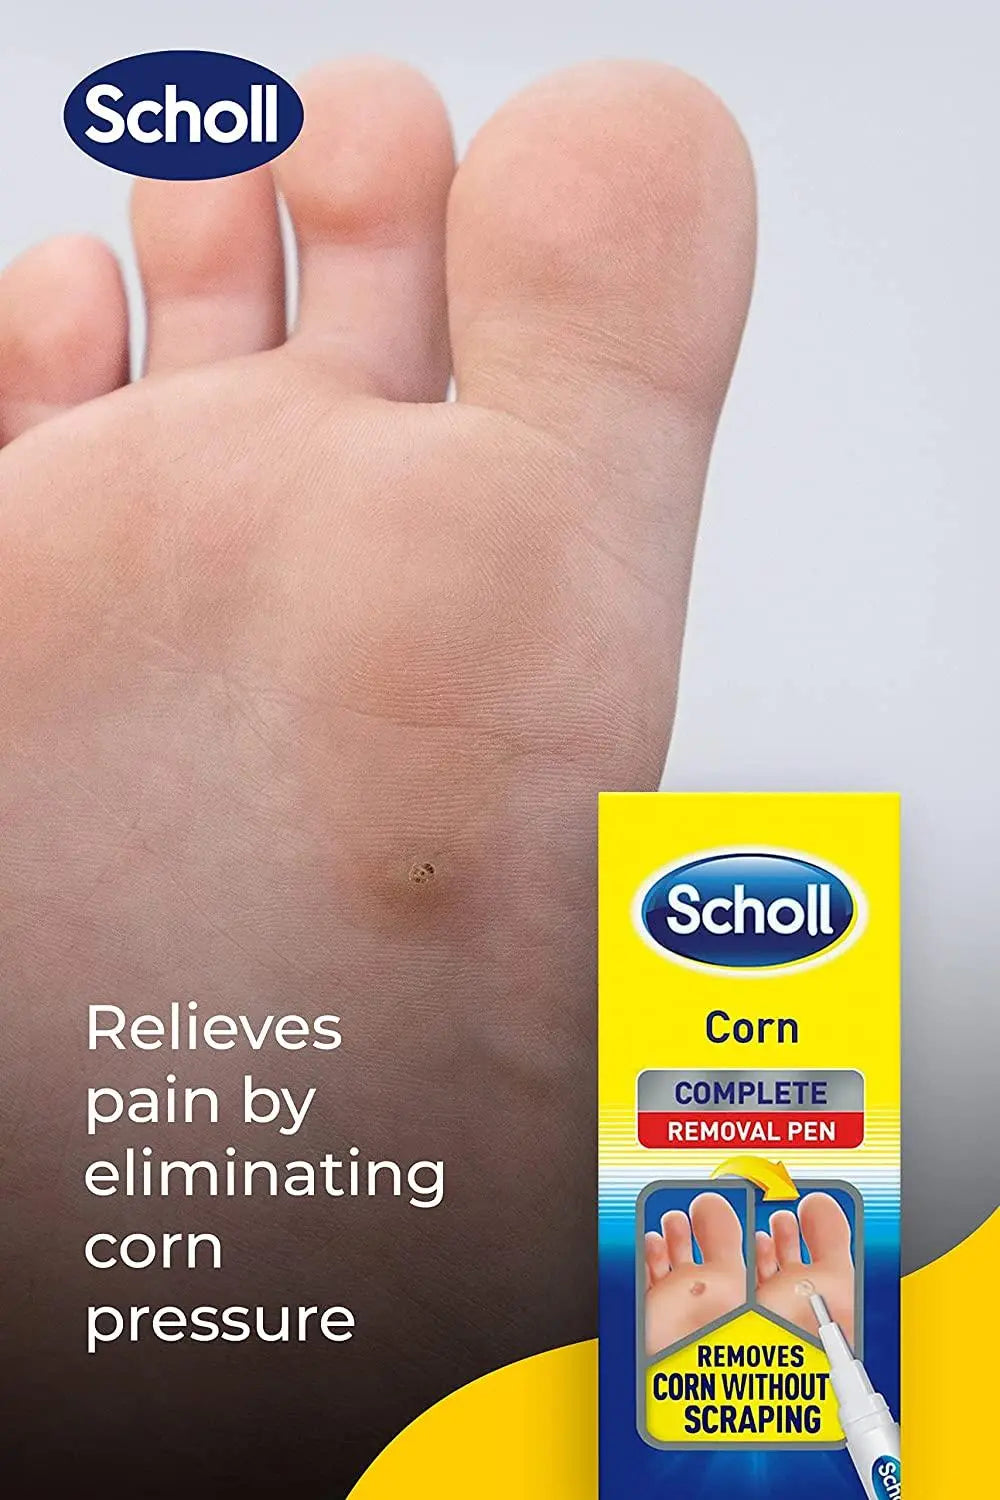 Scholl Corn Complete Removal Treatment Pen